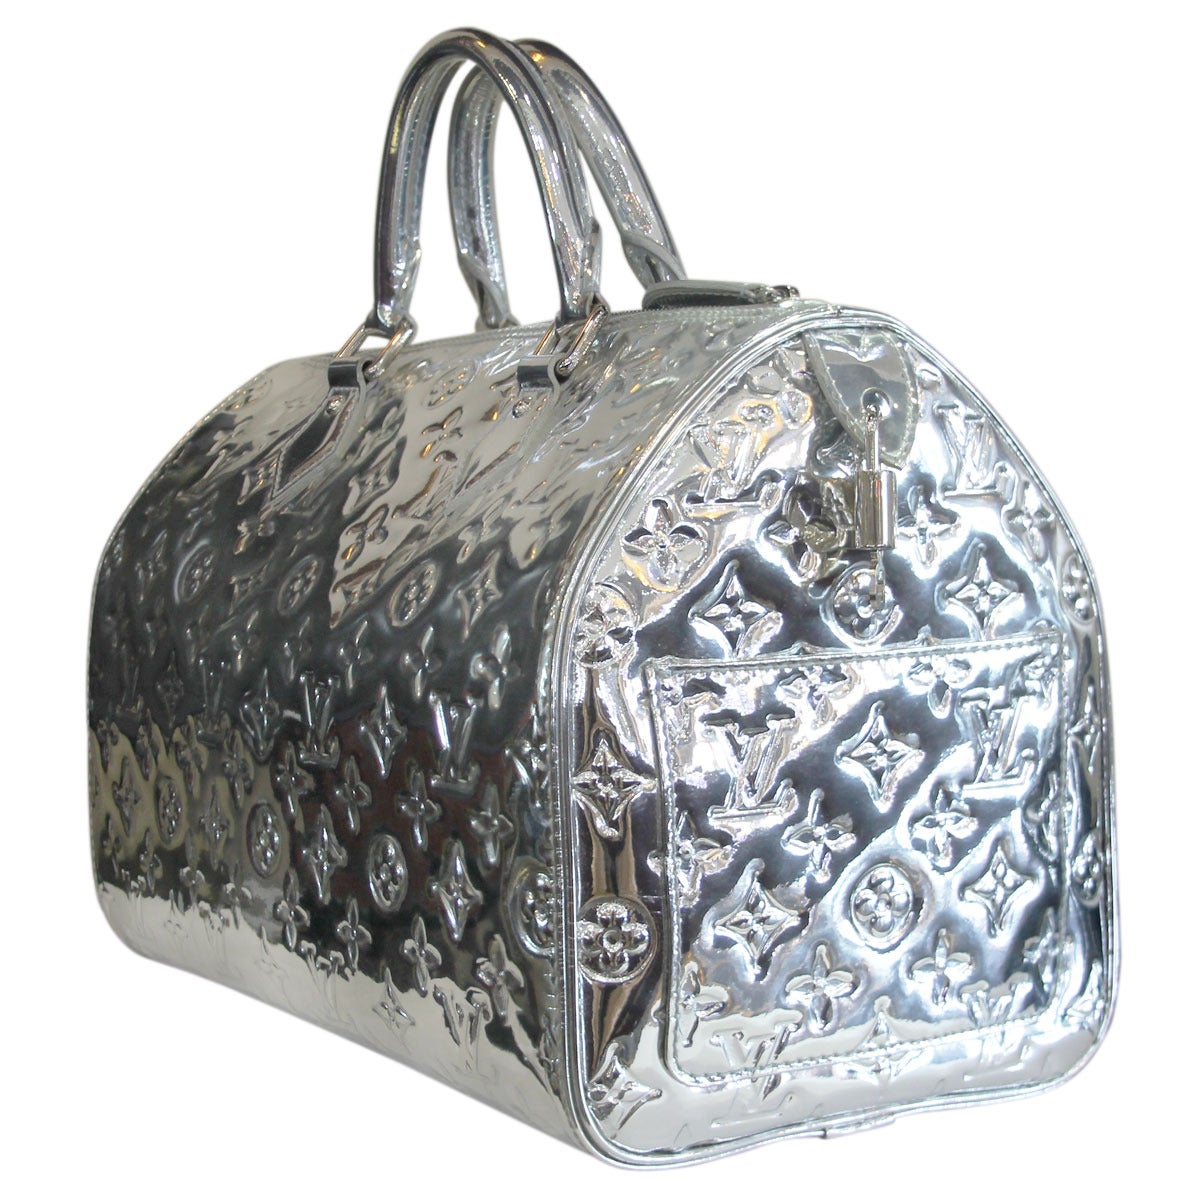 Louis Vuitton Speedy 30 Silver Monogram Miroir Handbag Purse at 1stdibs